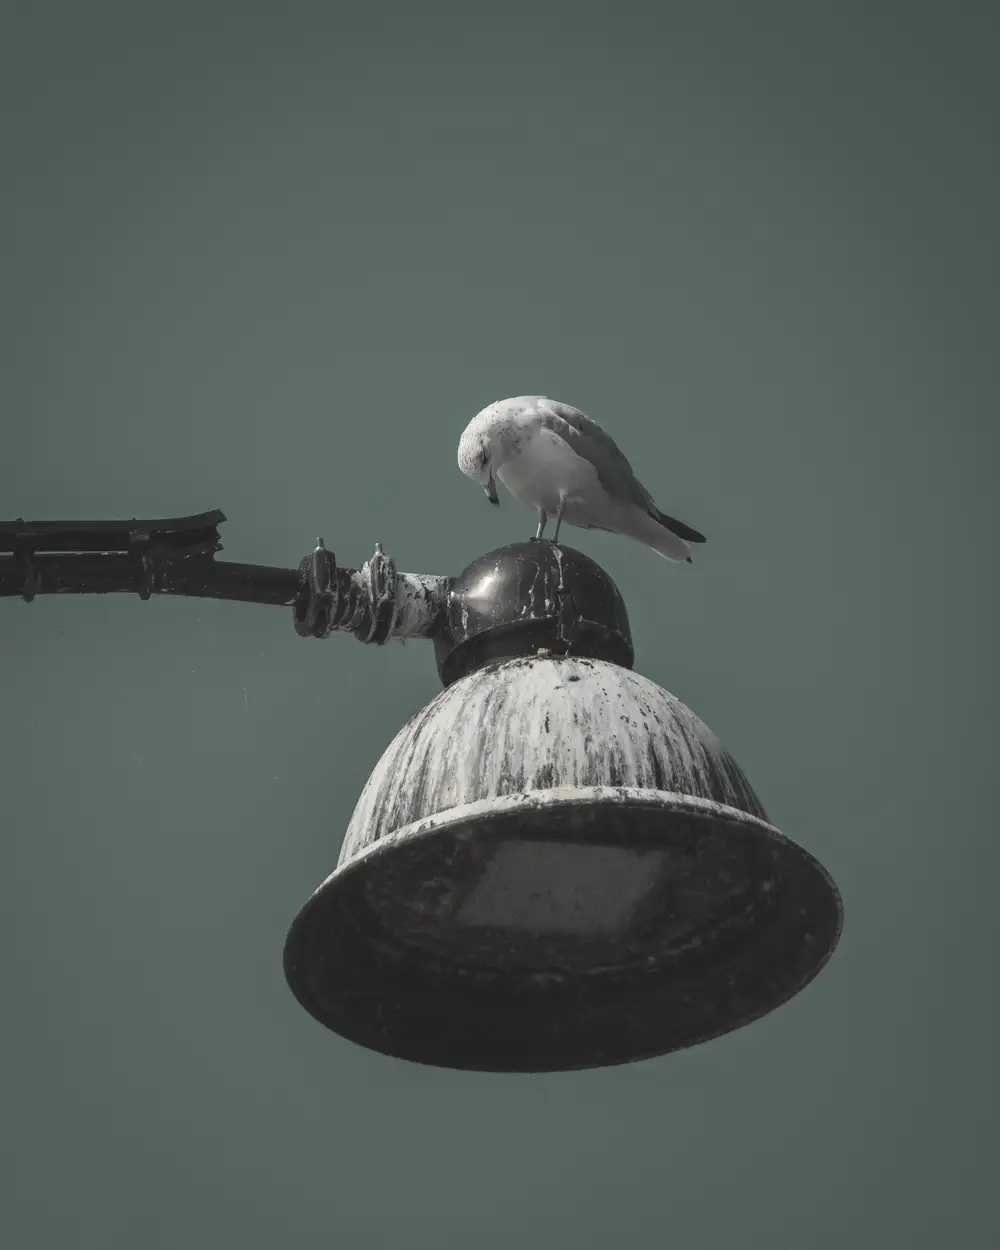 Bird looking at street lamp